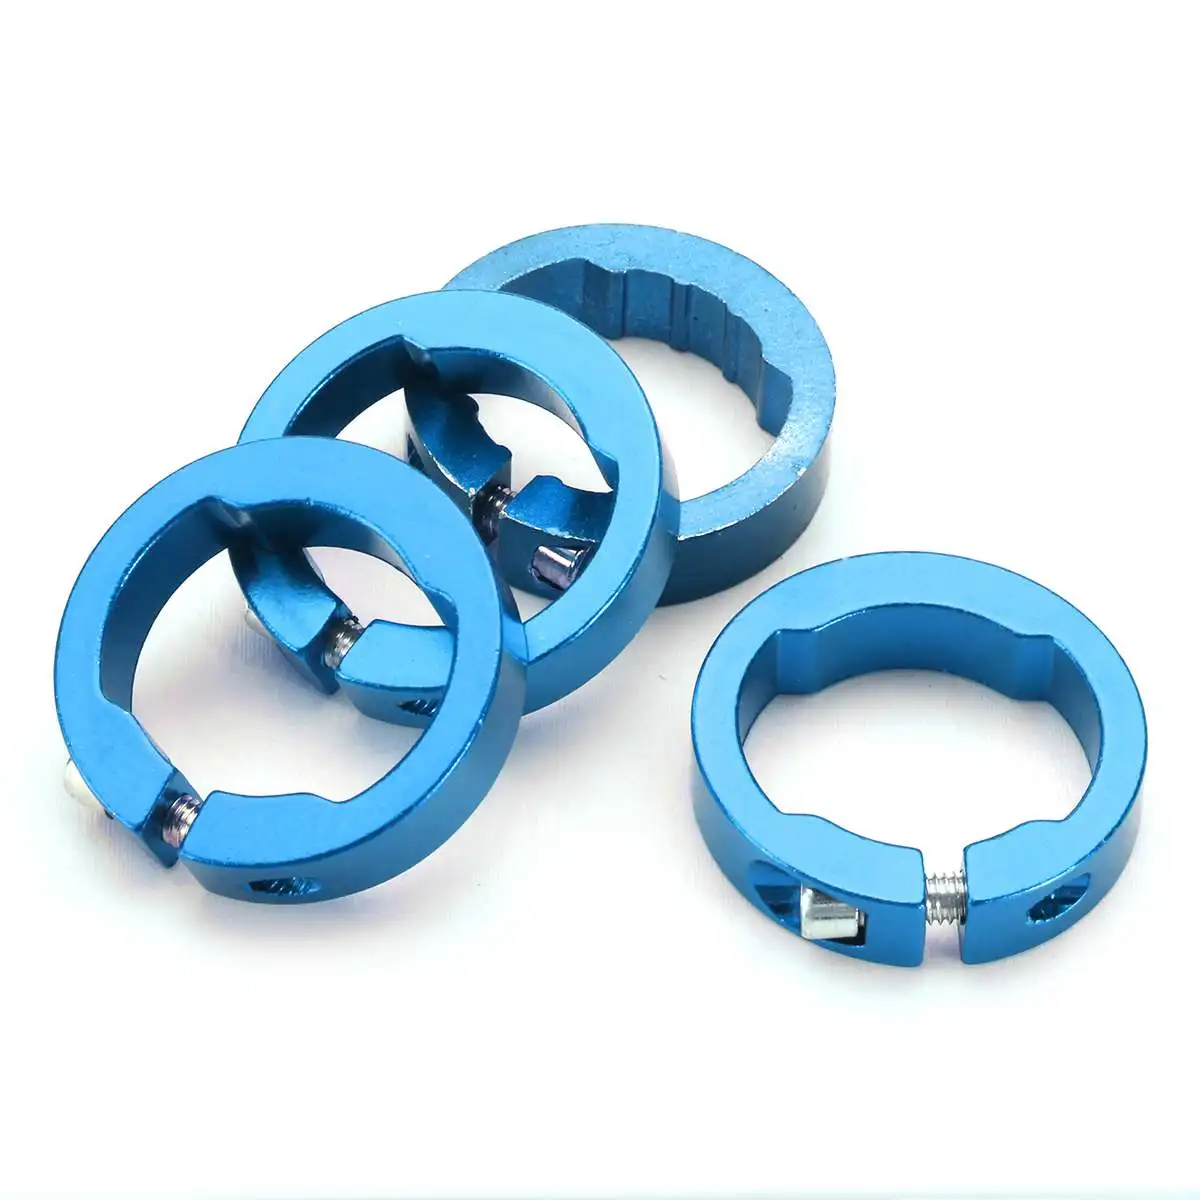 4 шт. Велосипедное кольцо для захвата сплав замена замка на стопорных колец 8/12 мм для рукоятка ручки MTB руль для велосипеда, Запчасти - Цвет: Blue 8mm